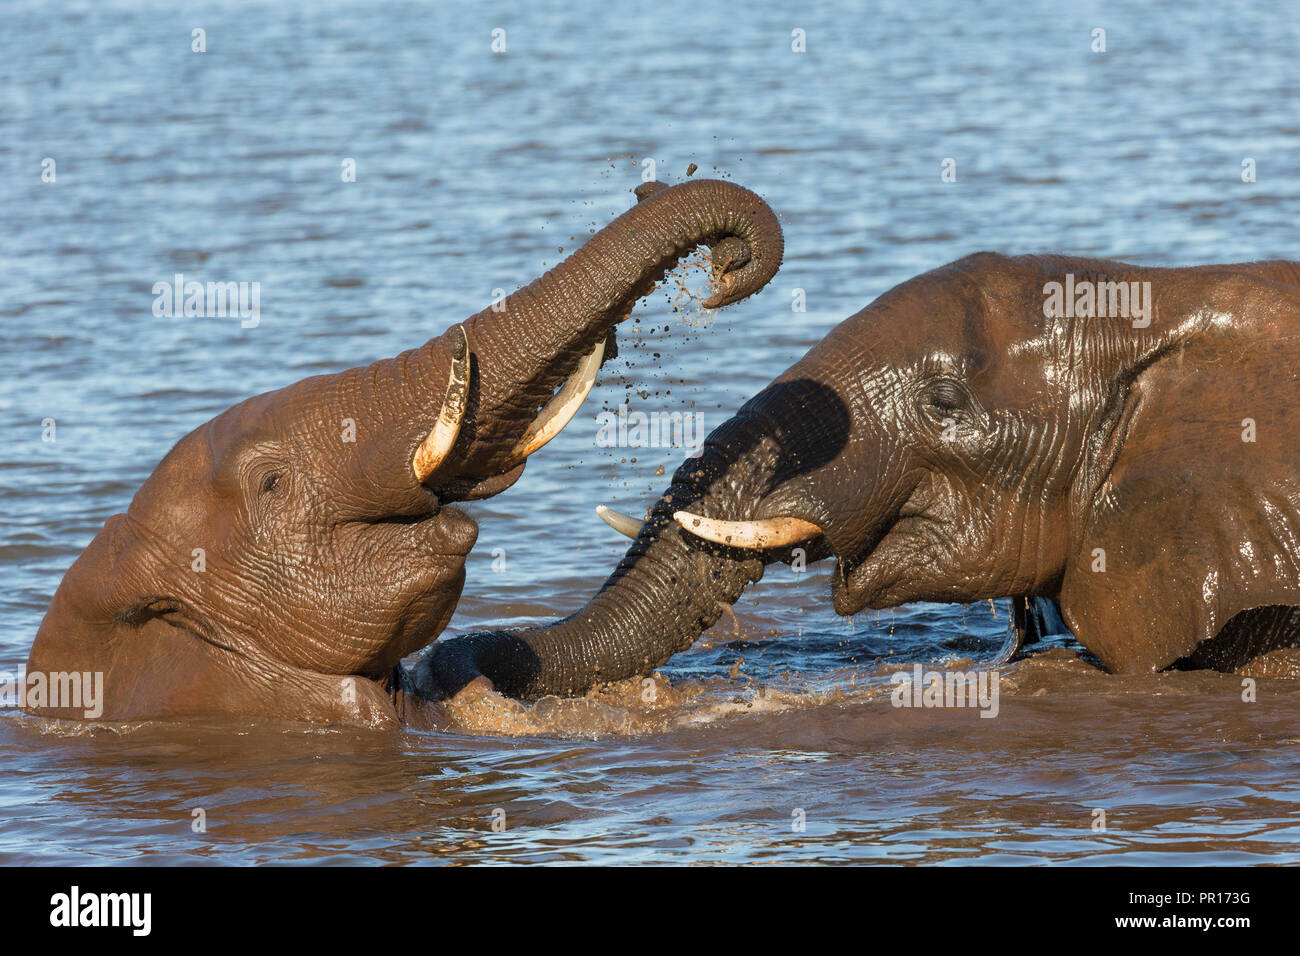 Elephant bulls (Loxodonta africana) playing in water, Zimanga Private Game Reserve, KwaZulu-Natal, South Africa, Africa Stock Photo